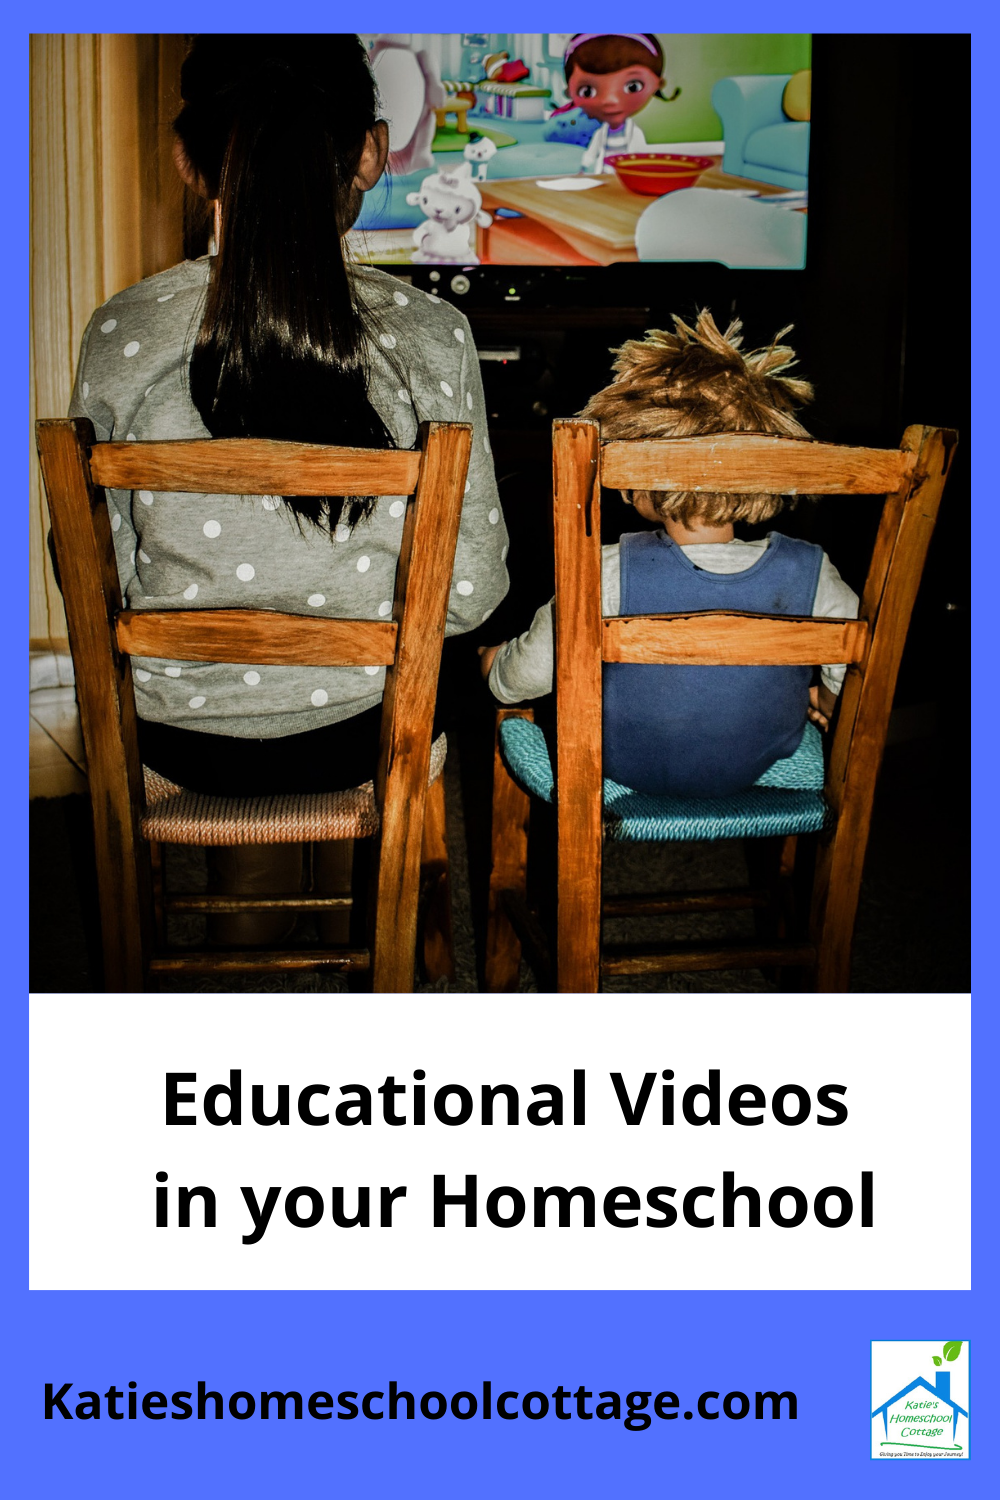 Using videos in your homeschool